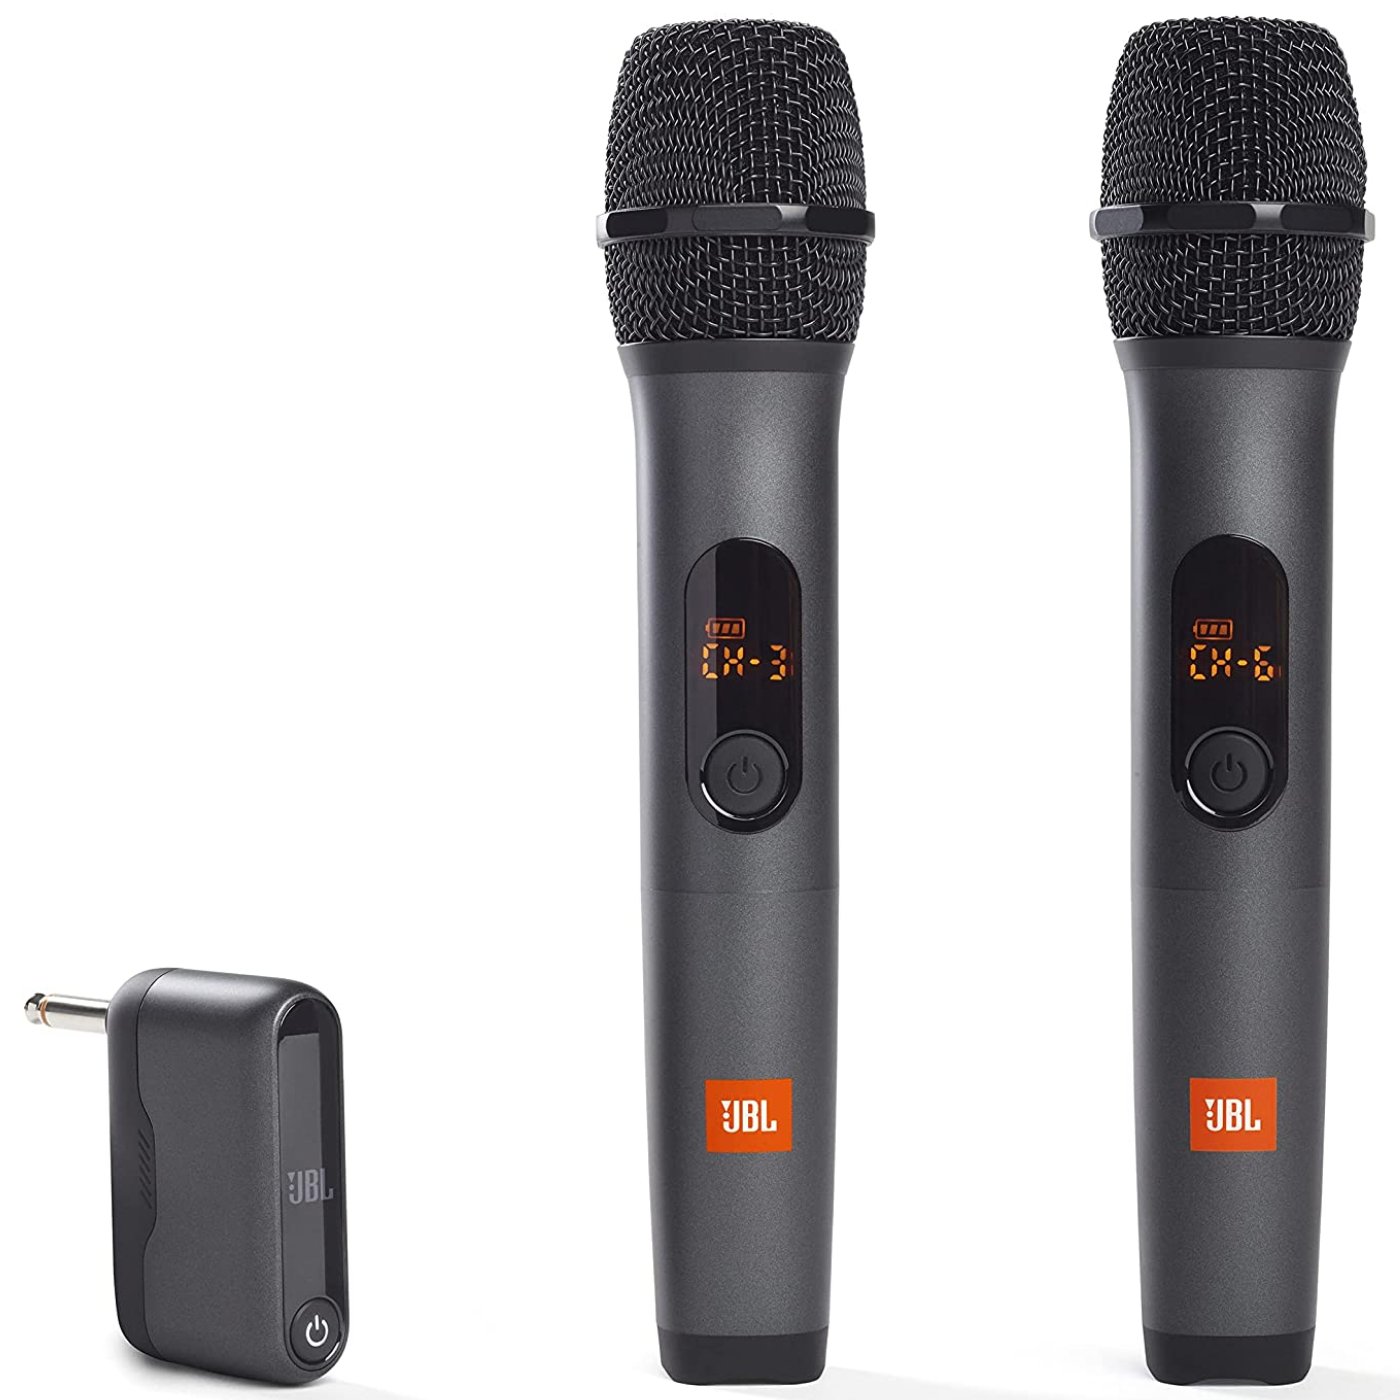 Set of 2 Wireless Karaoke Microphones – 11 Hour Run Time, USB